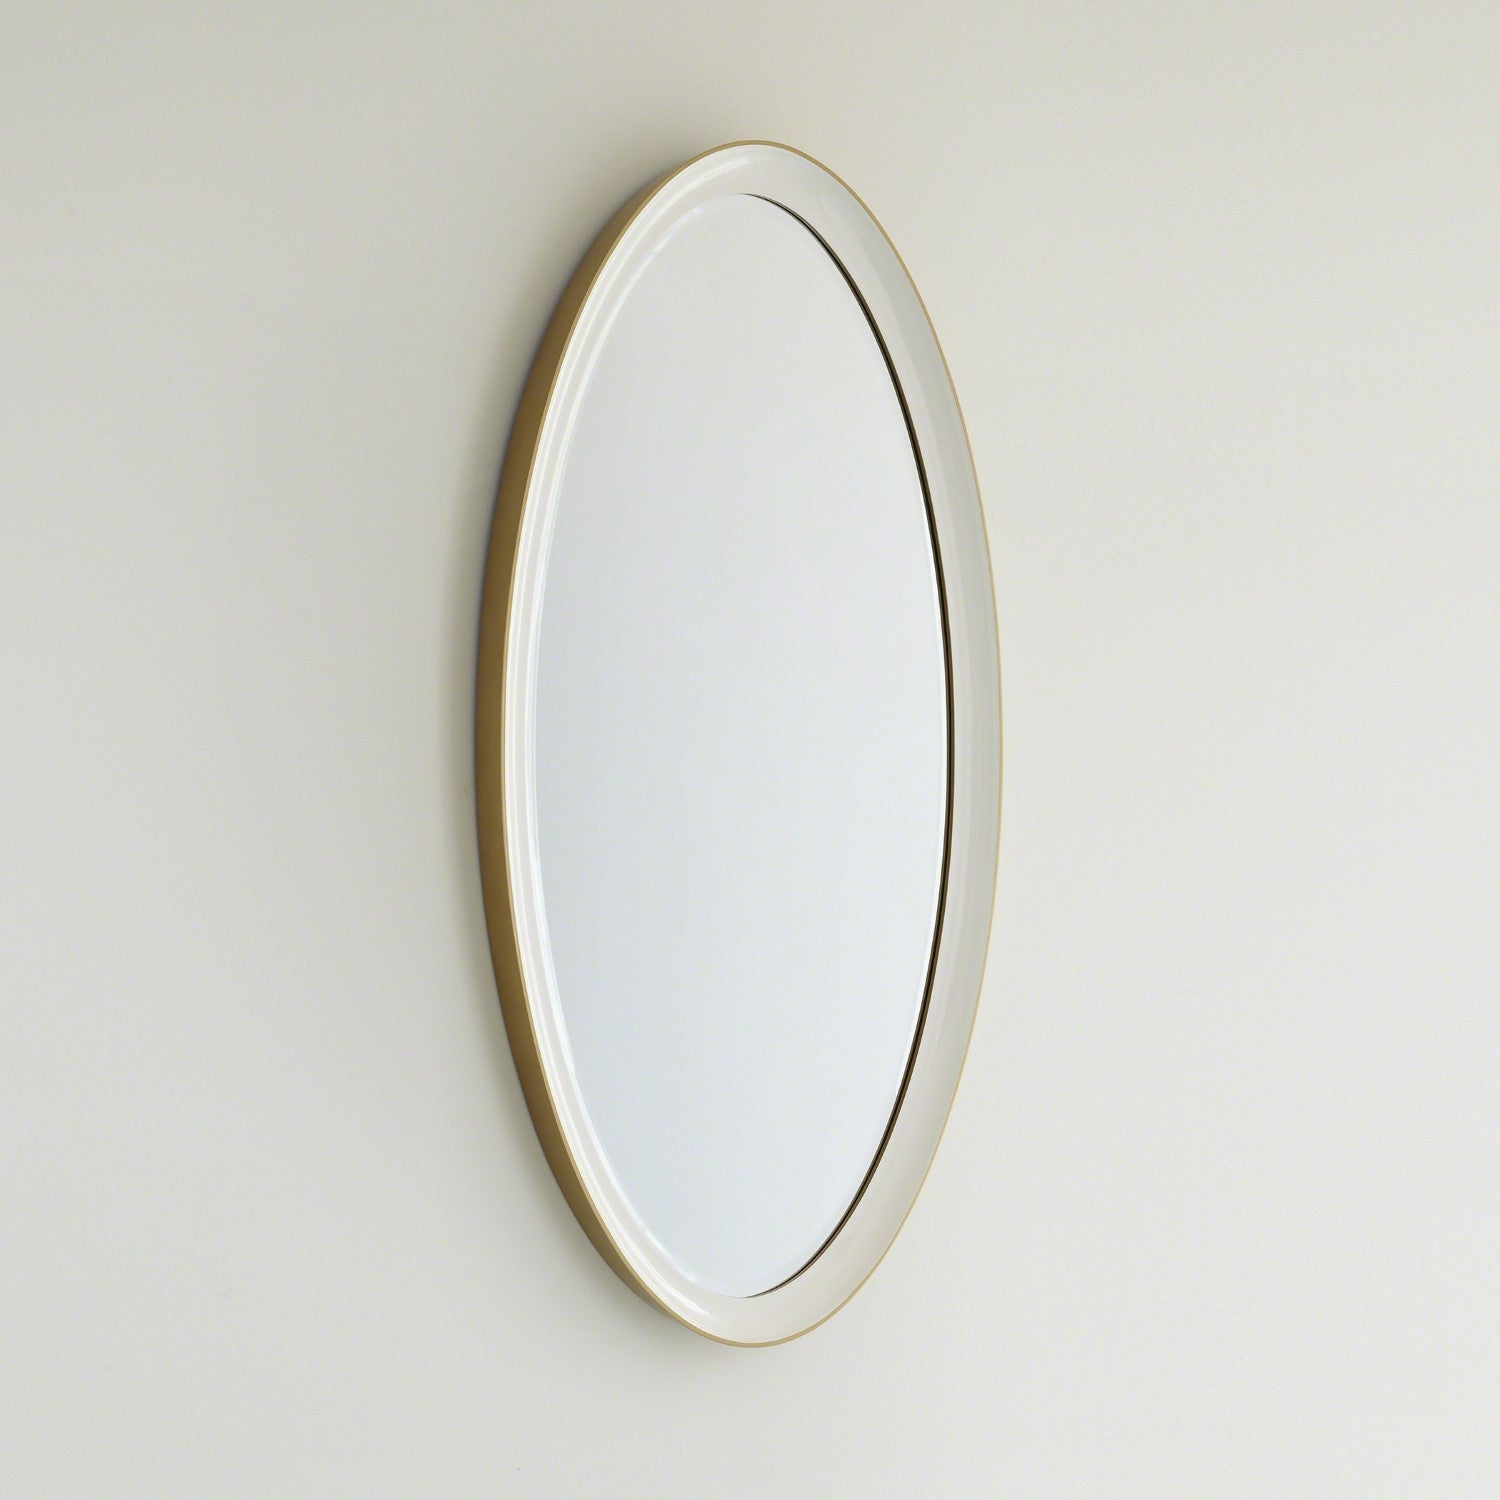 Orbis Mirror - Small - Grats Decor Interior Design & Build Inc.